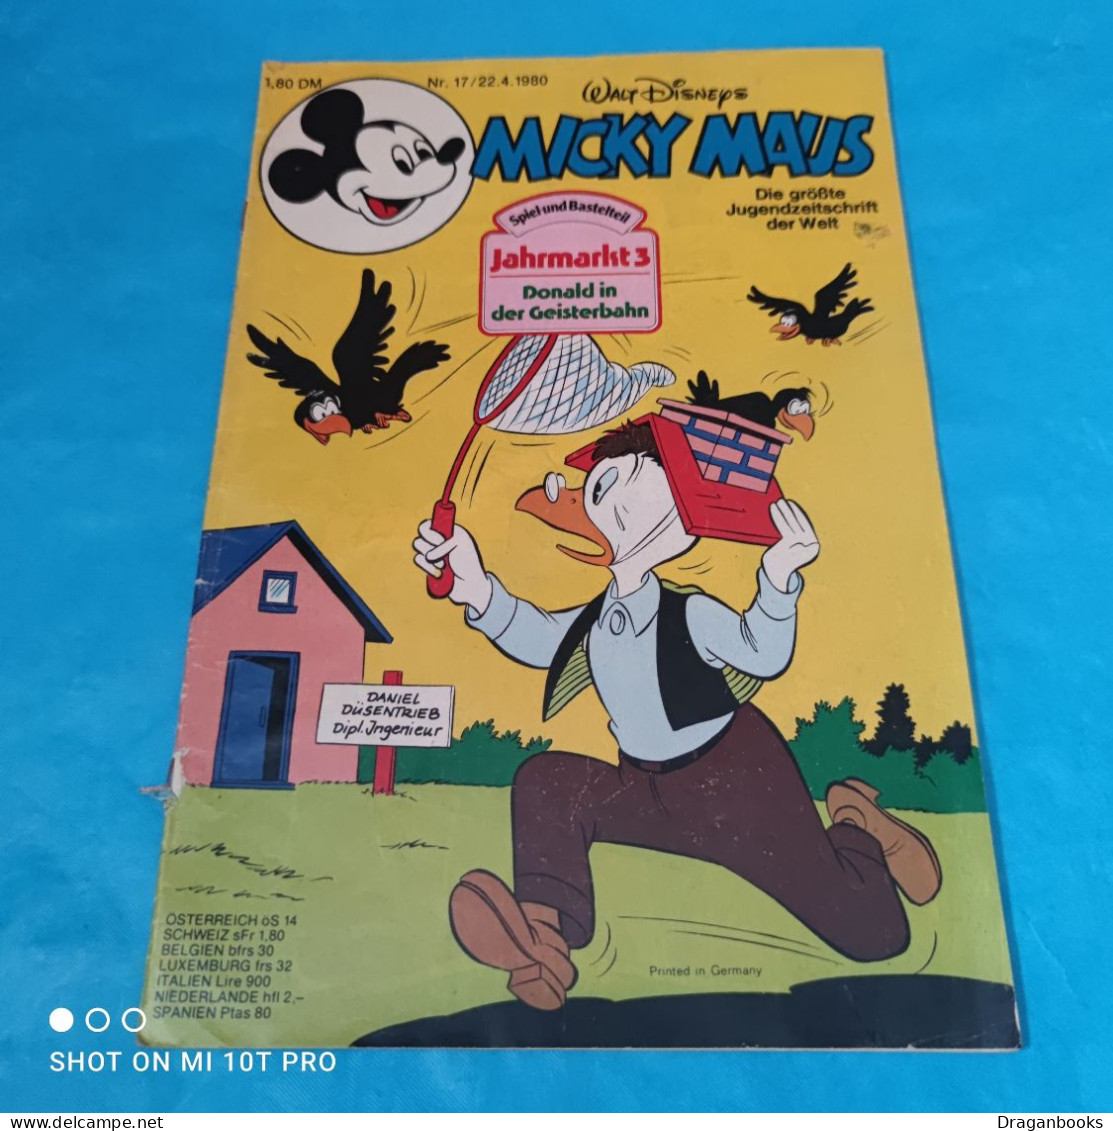 Micky Maus Nr. 17 - 22.4.1980 - Walt Disney